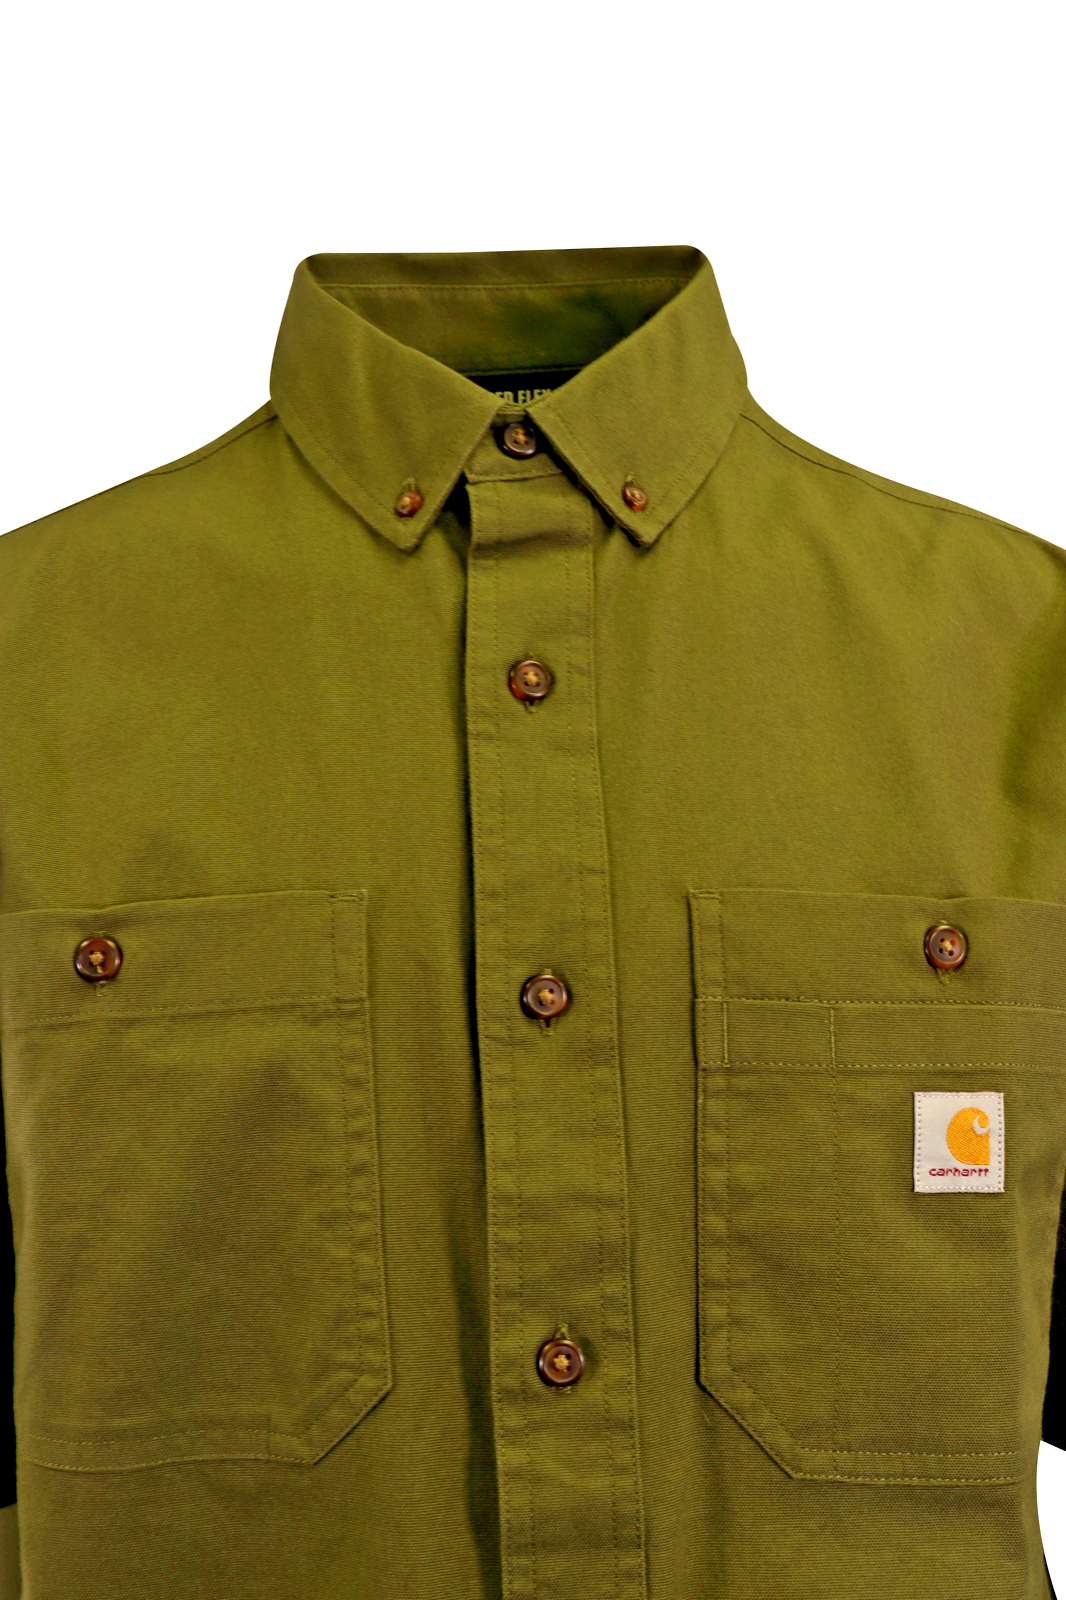 Carhartt Men's Flannel Shirt Olive Rugged Short Sleeve (221)